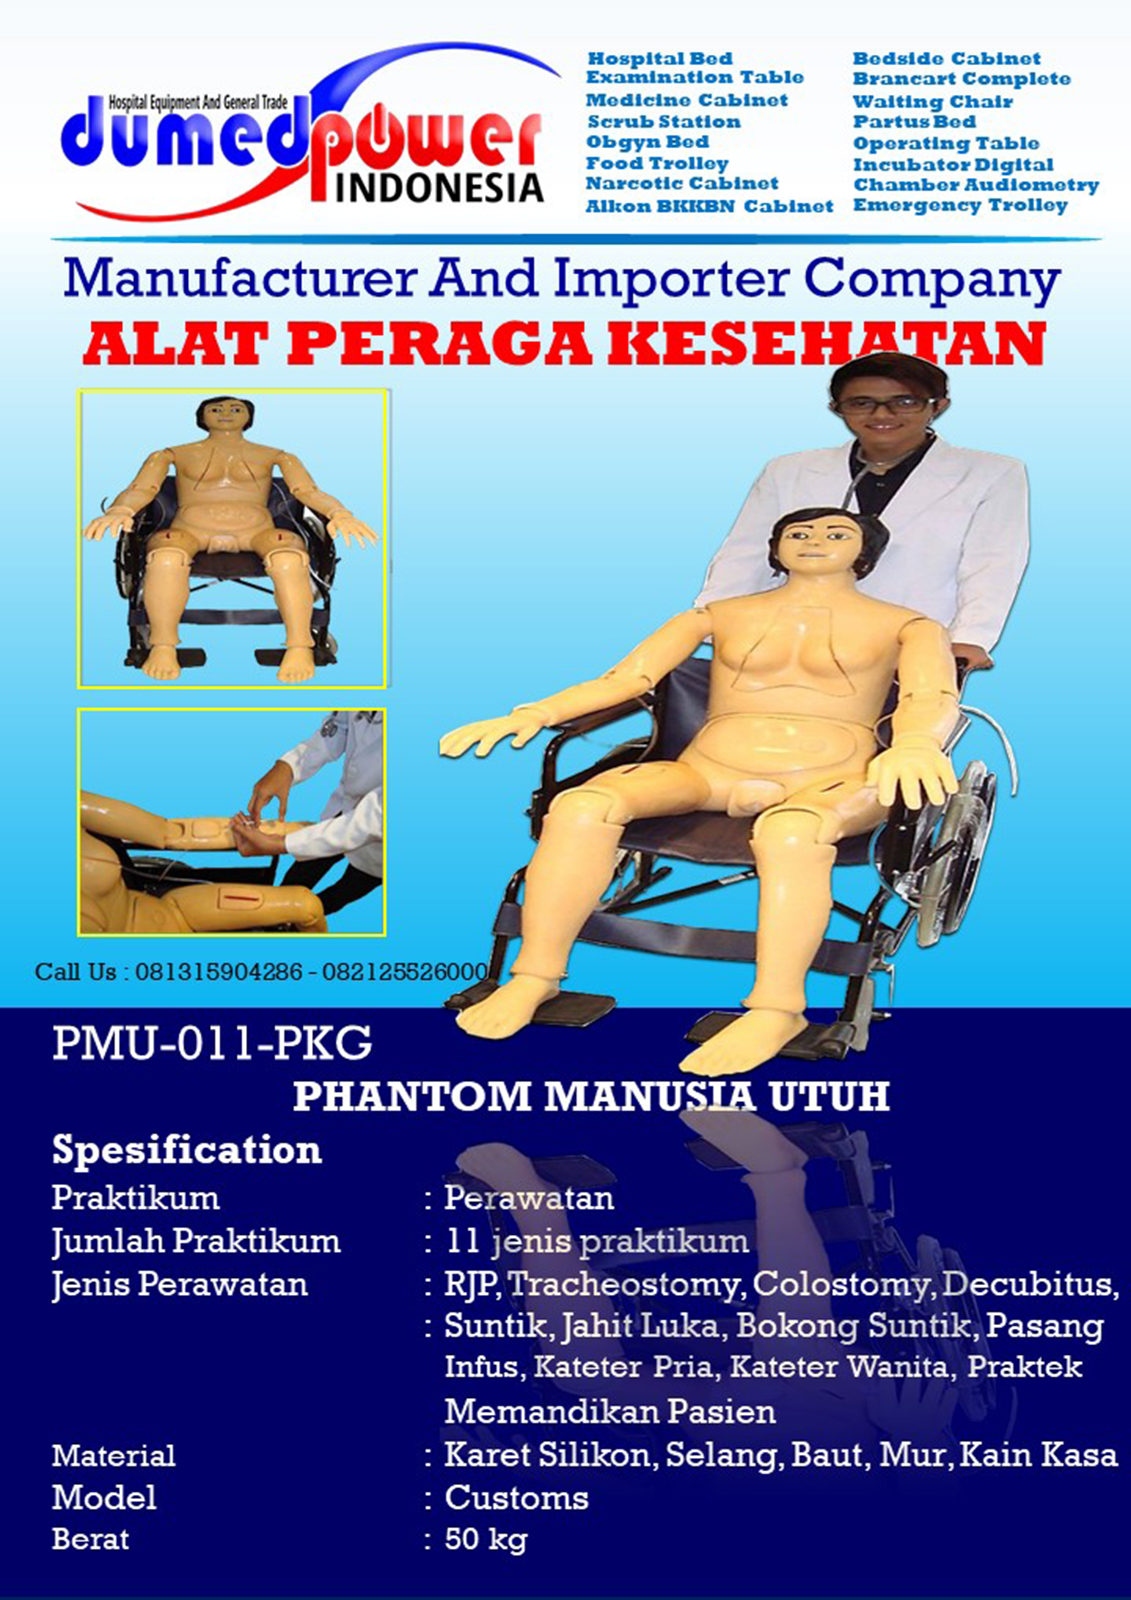 Phantom Manusia Utuh 11 Jenis Praktikum PMU-011-PKG